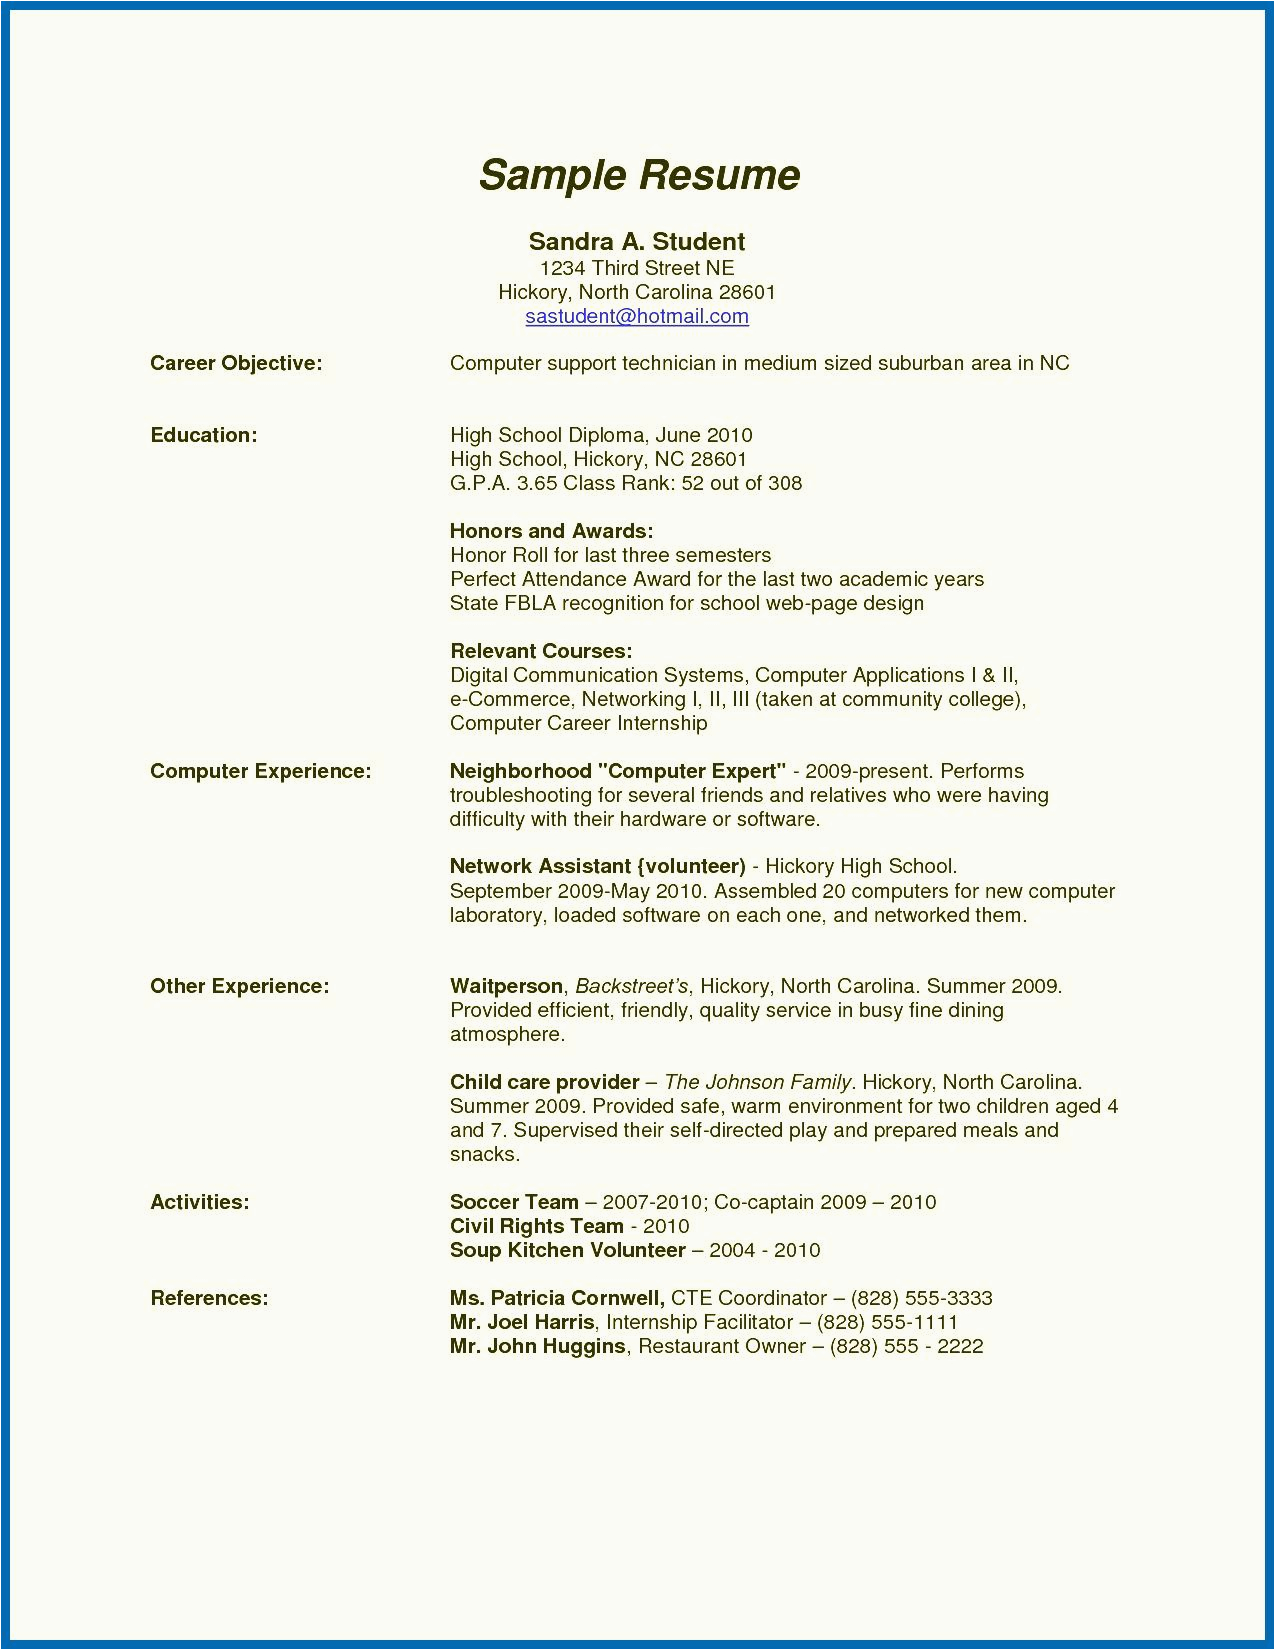 Sample Resume for High School Student Summer Job 11 12 High School Resume for Summer Job Aikenexplorer